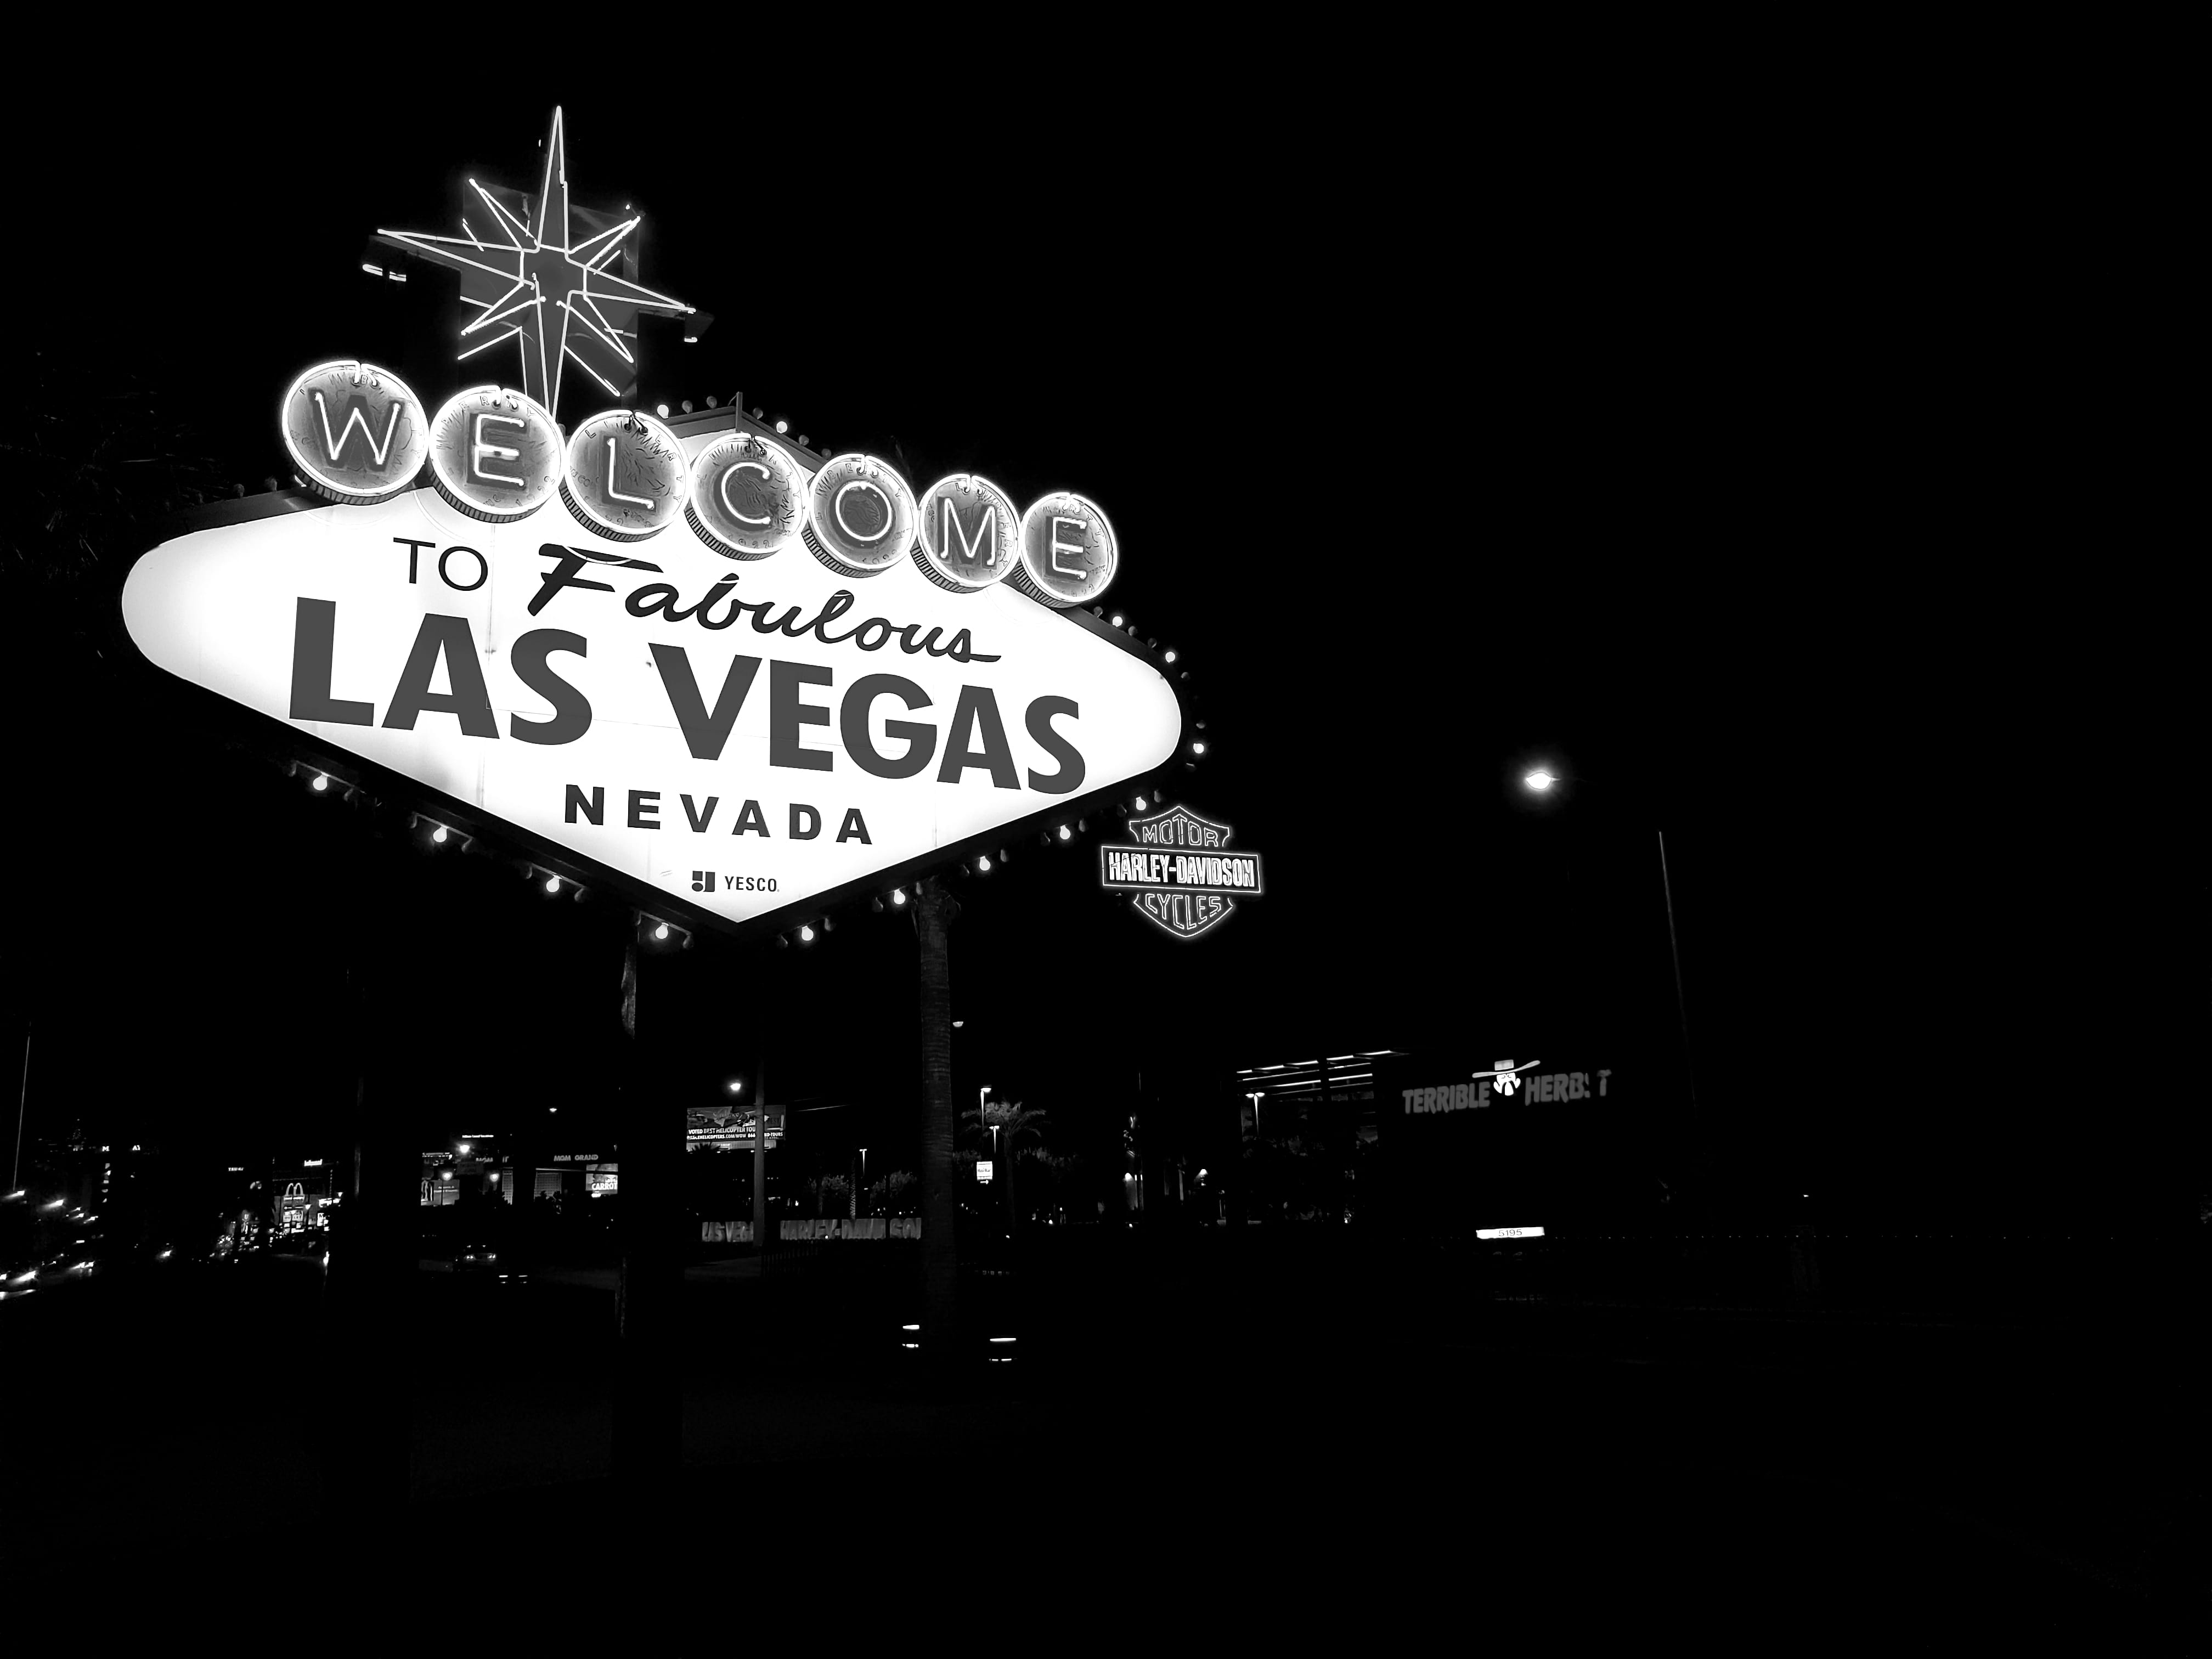 Welcome to Fabulous Las Vegas Nevada Led Signage, black and-white